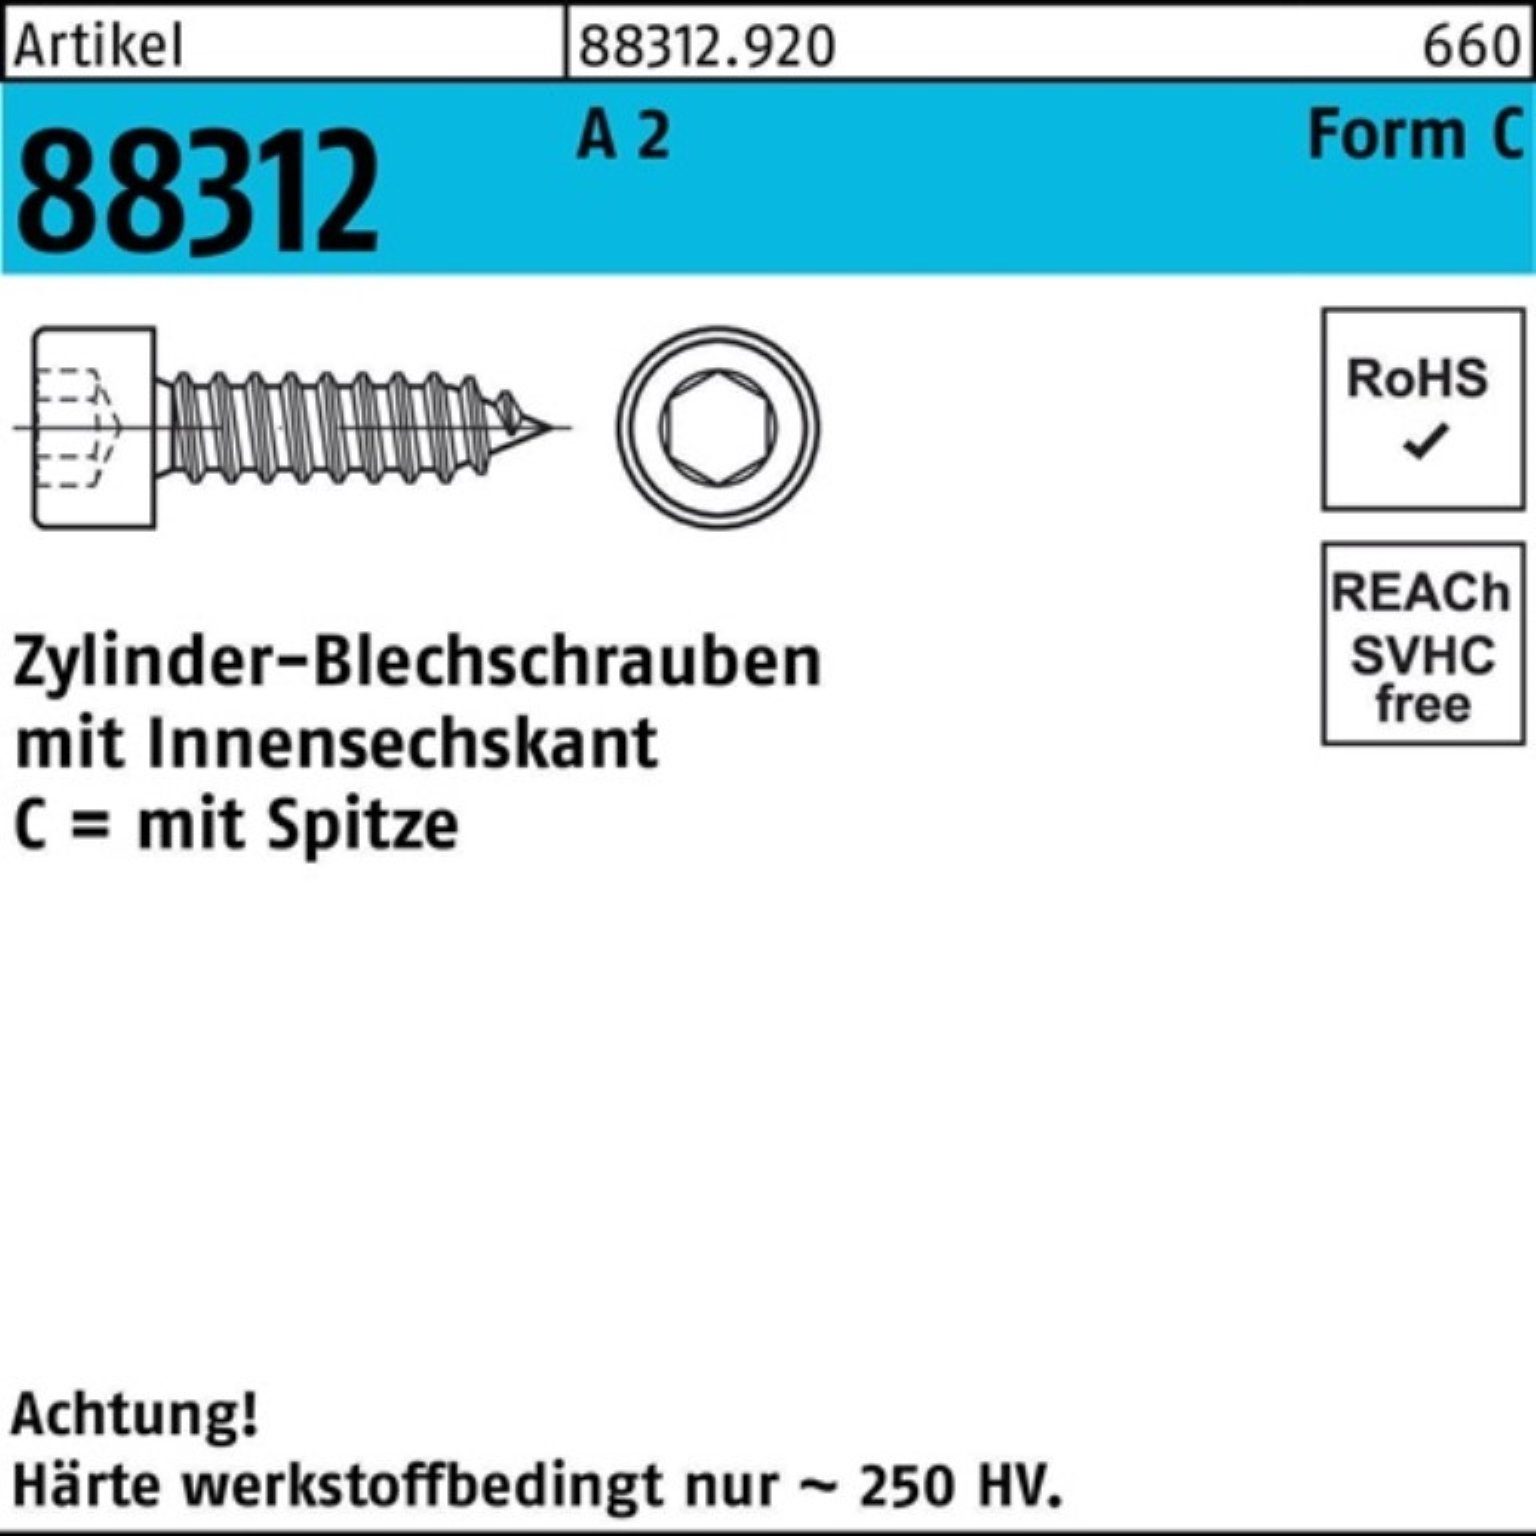 Reyher Blechschraube 200er Pack Zylinderblechschraube R 88312 Spitze/Innen-6kt C 5,5x 60 A